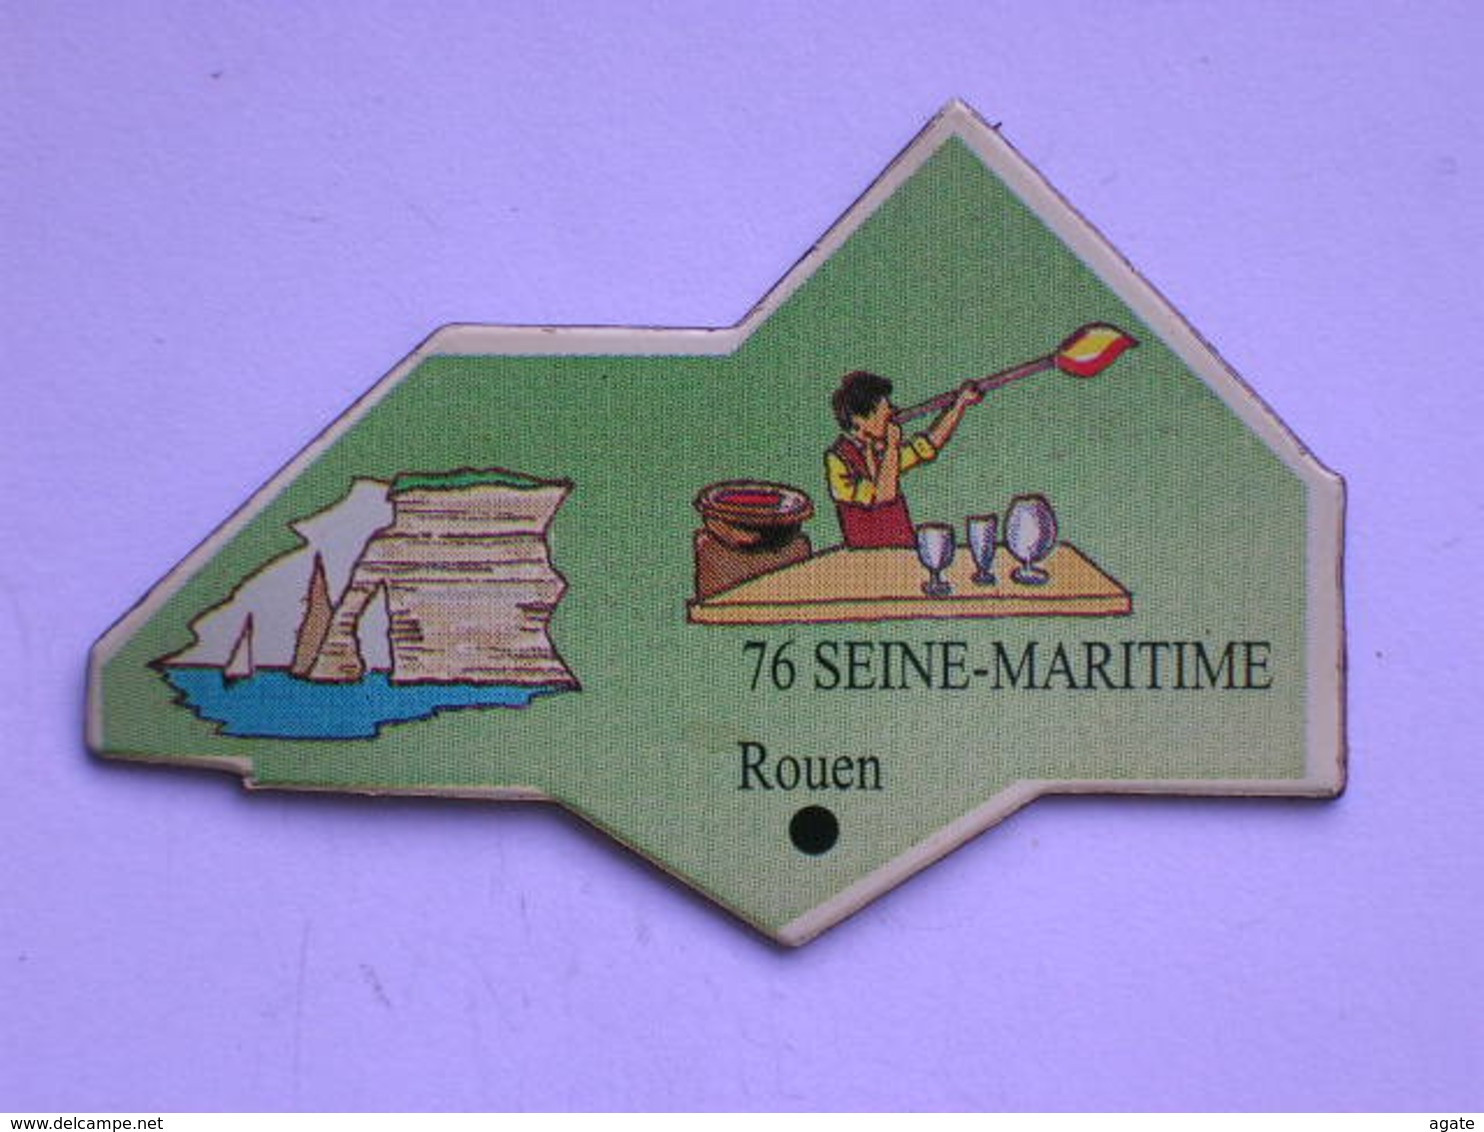 Magnet Le Gaulois DEPARTEMENT FRANCE 76 Seine-Maritime - Magnets